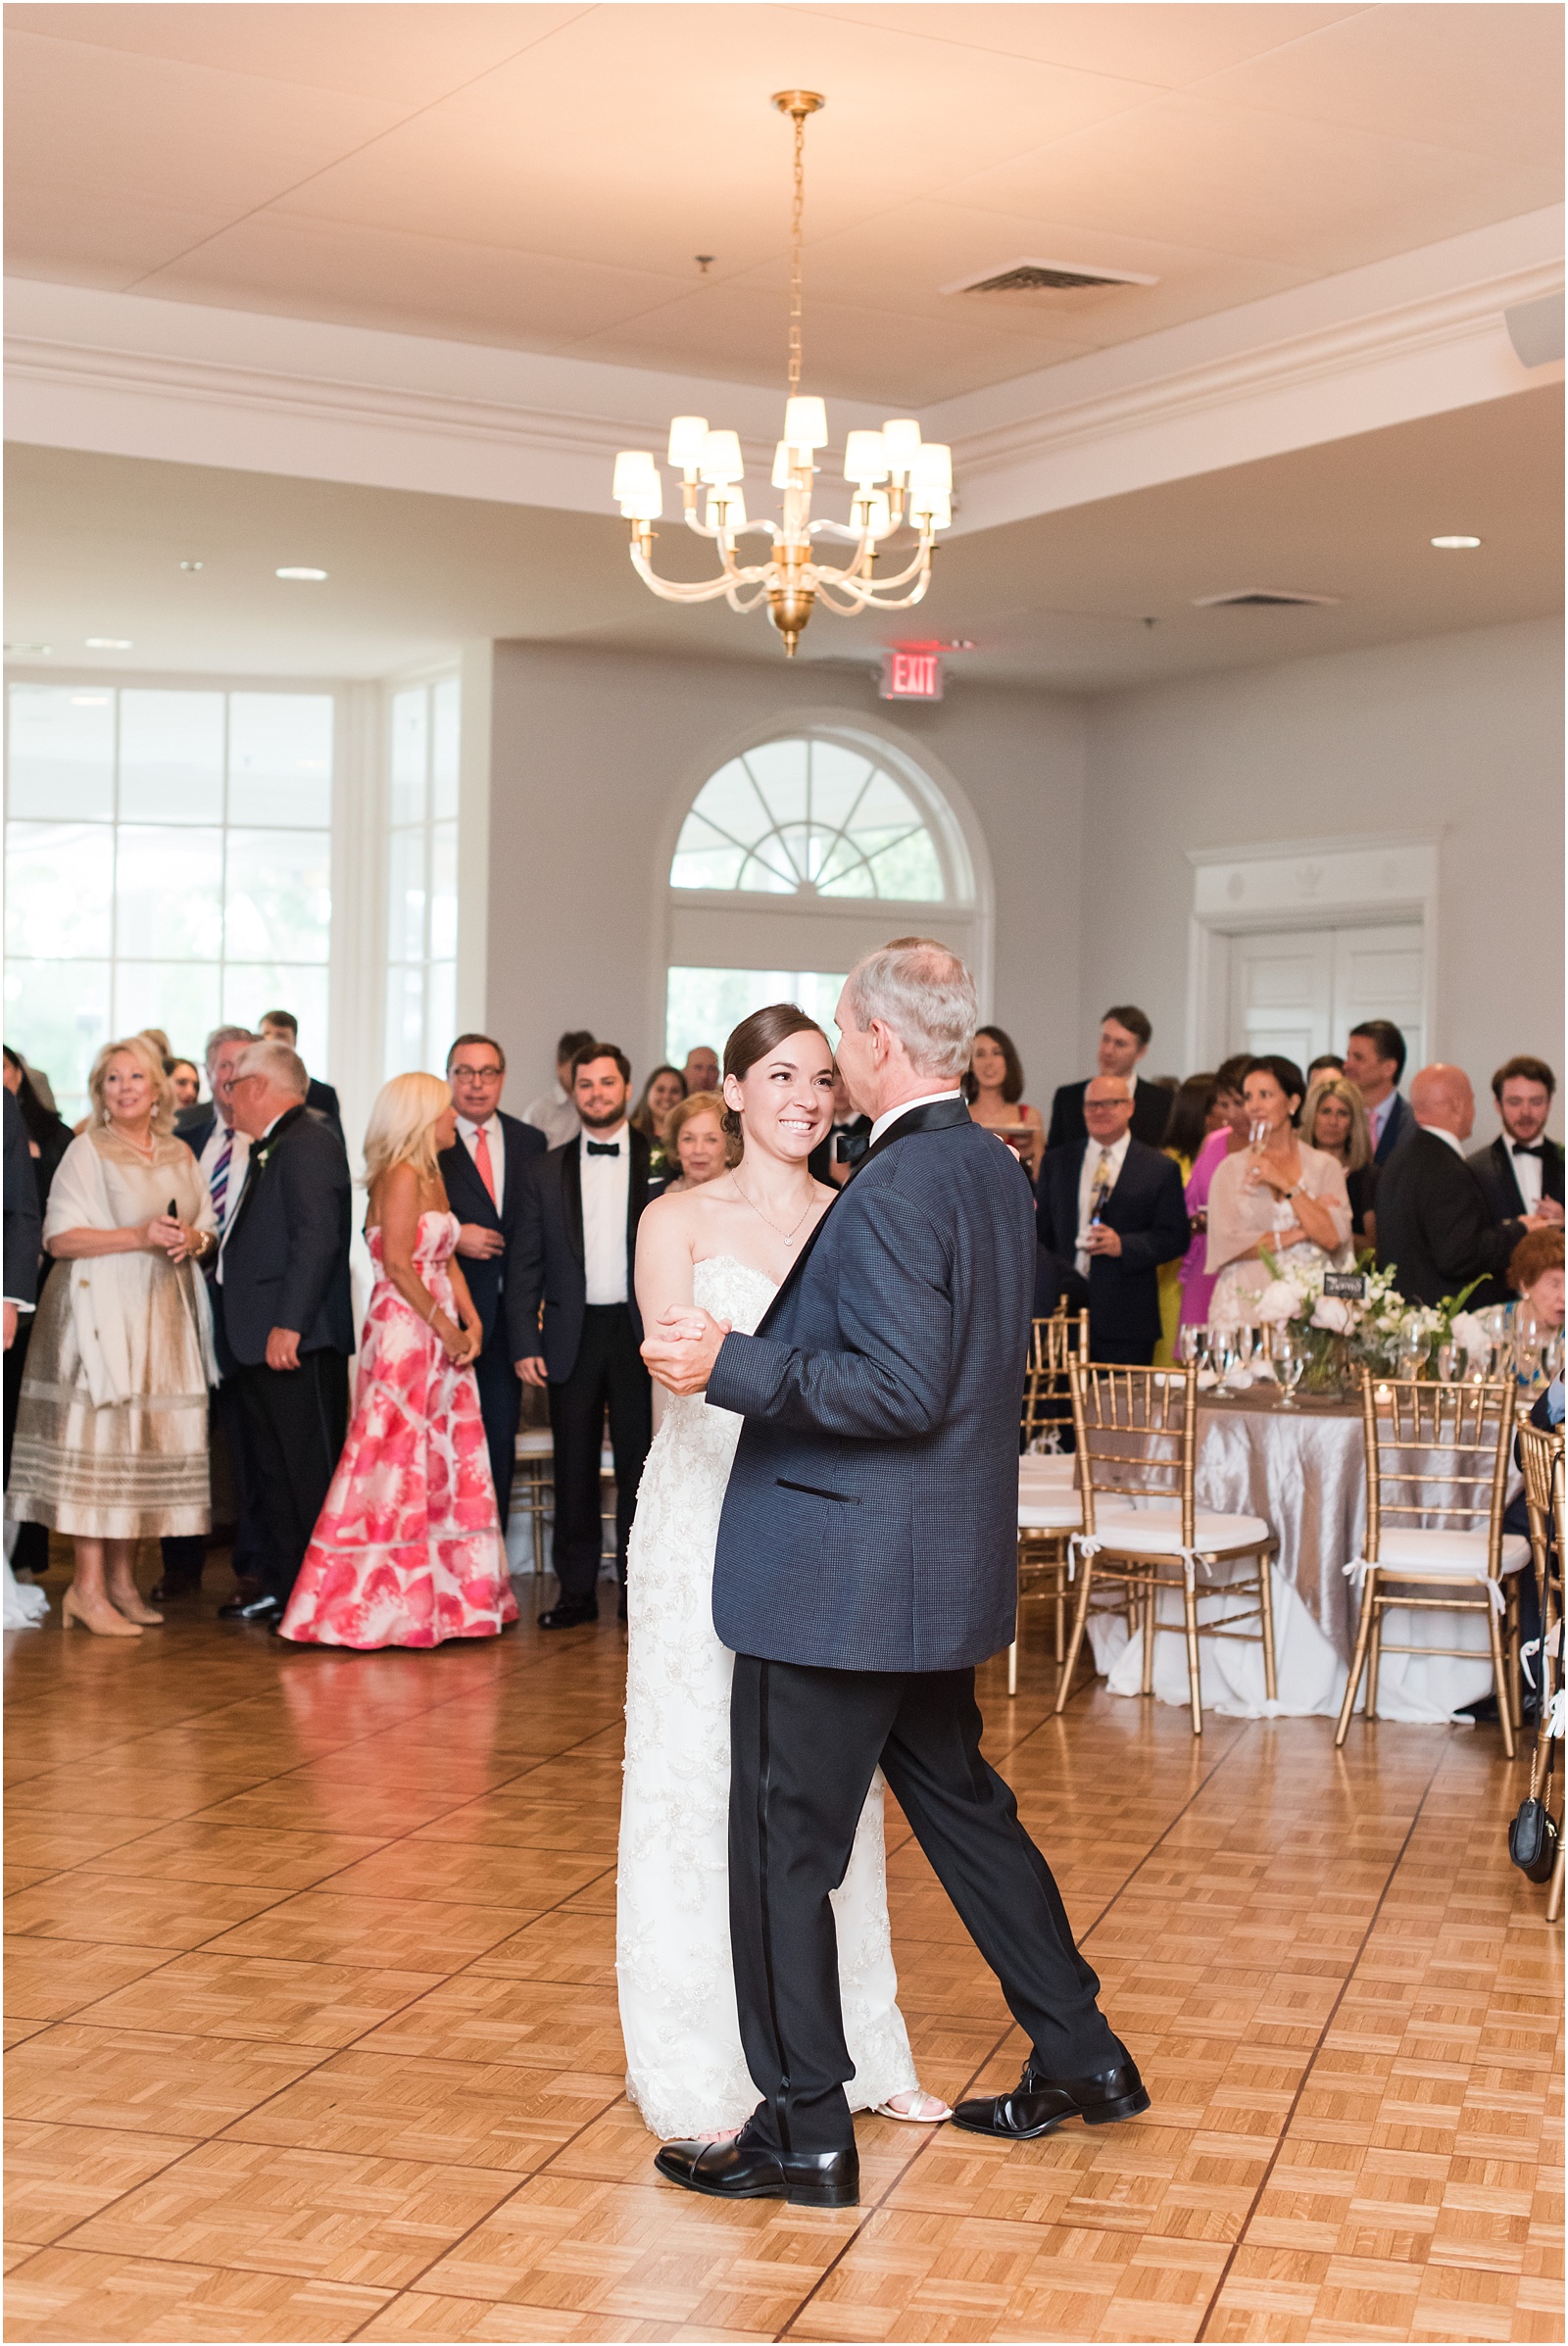 An Elegant Black Tie Wedding, Michelle and Sara Photography, Burlington NC